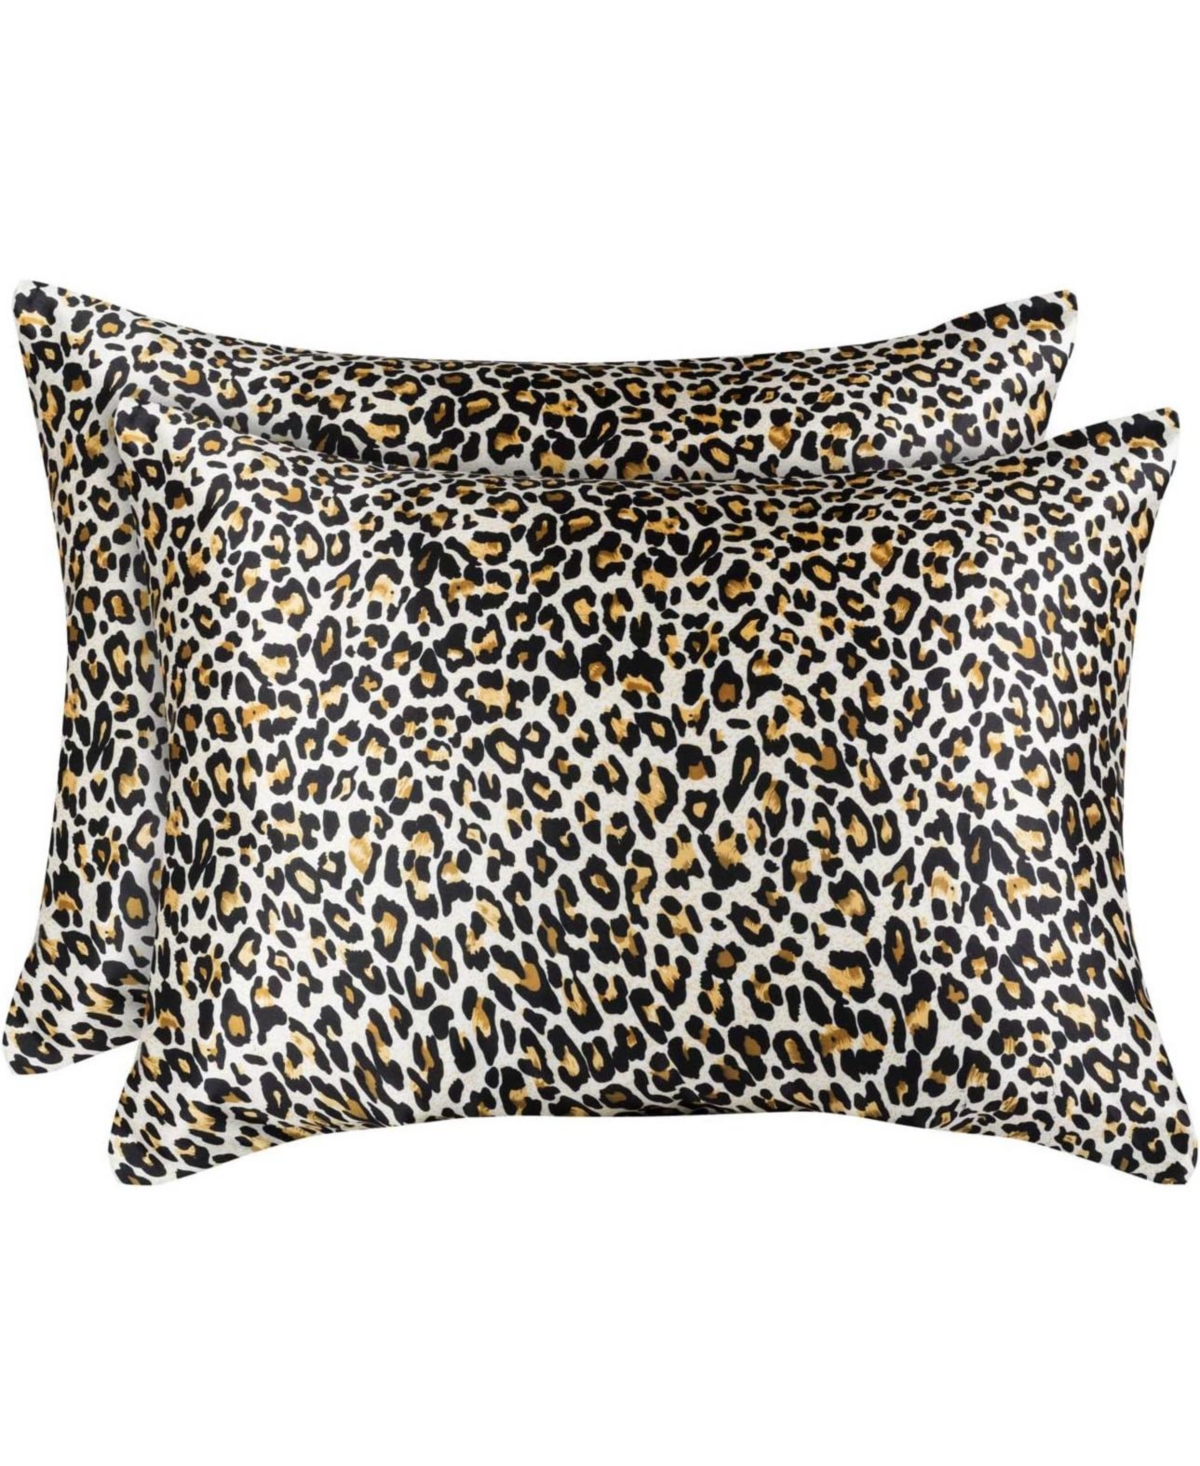 Shopbedding Luxury Satin Pillowcase For Hair And Skin- Standard Satin Pillow Case With Zipper, Rust (pillowcase In Animal Print